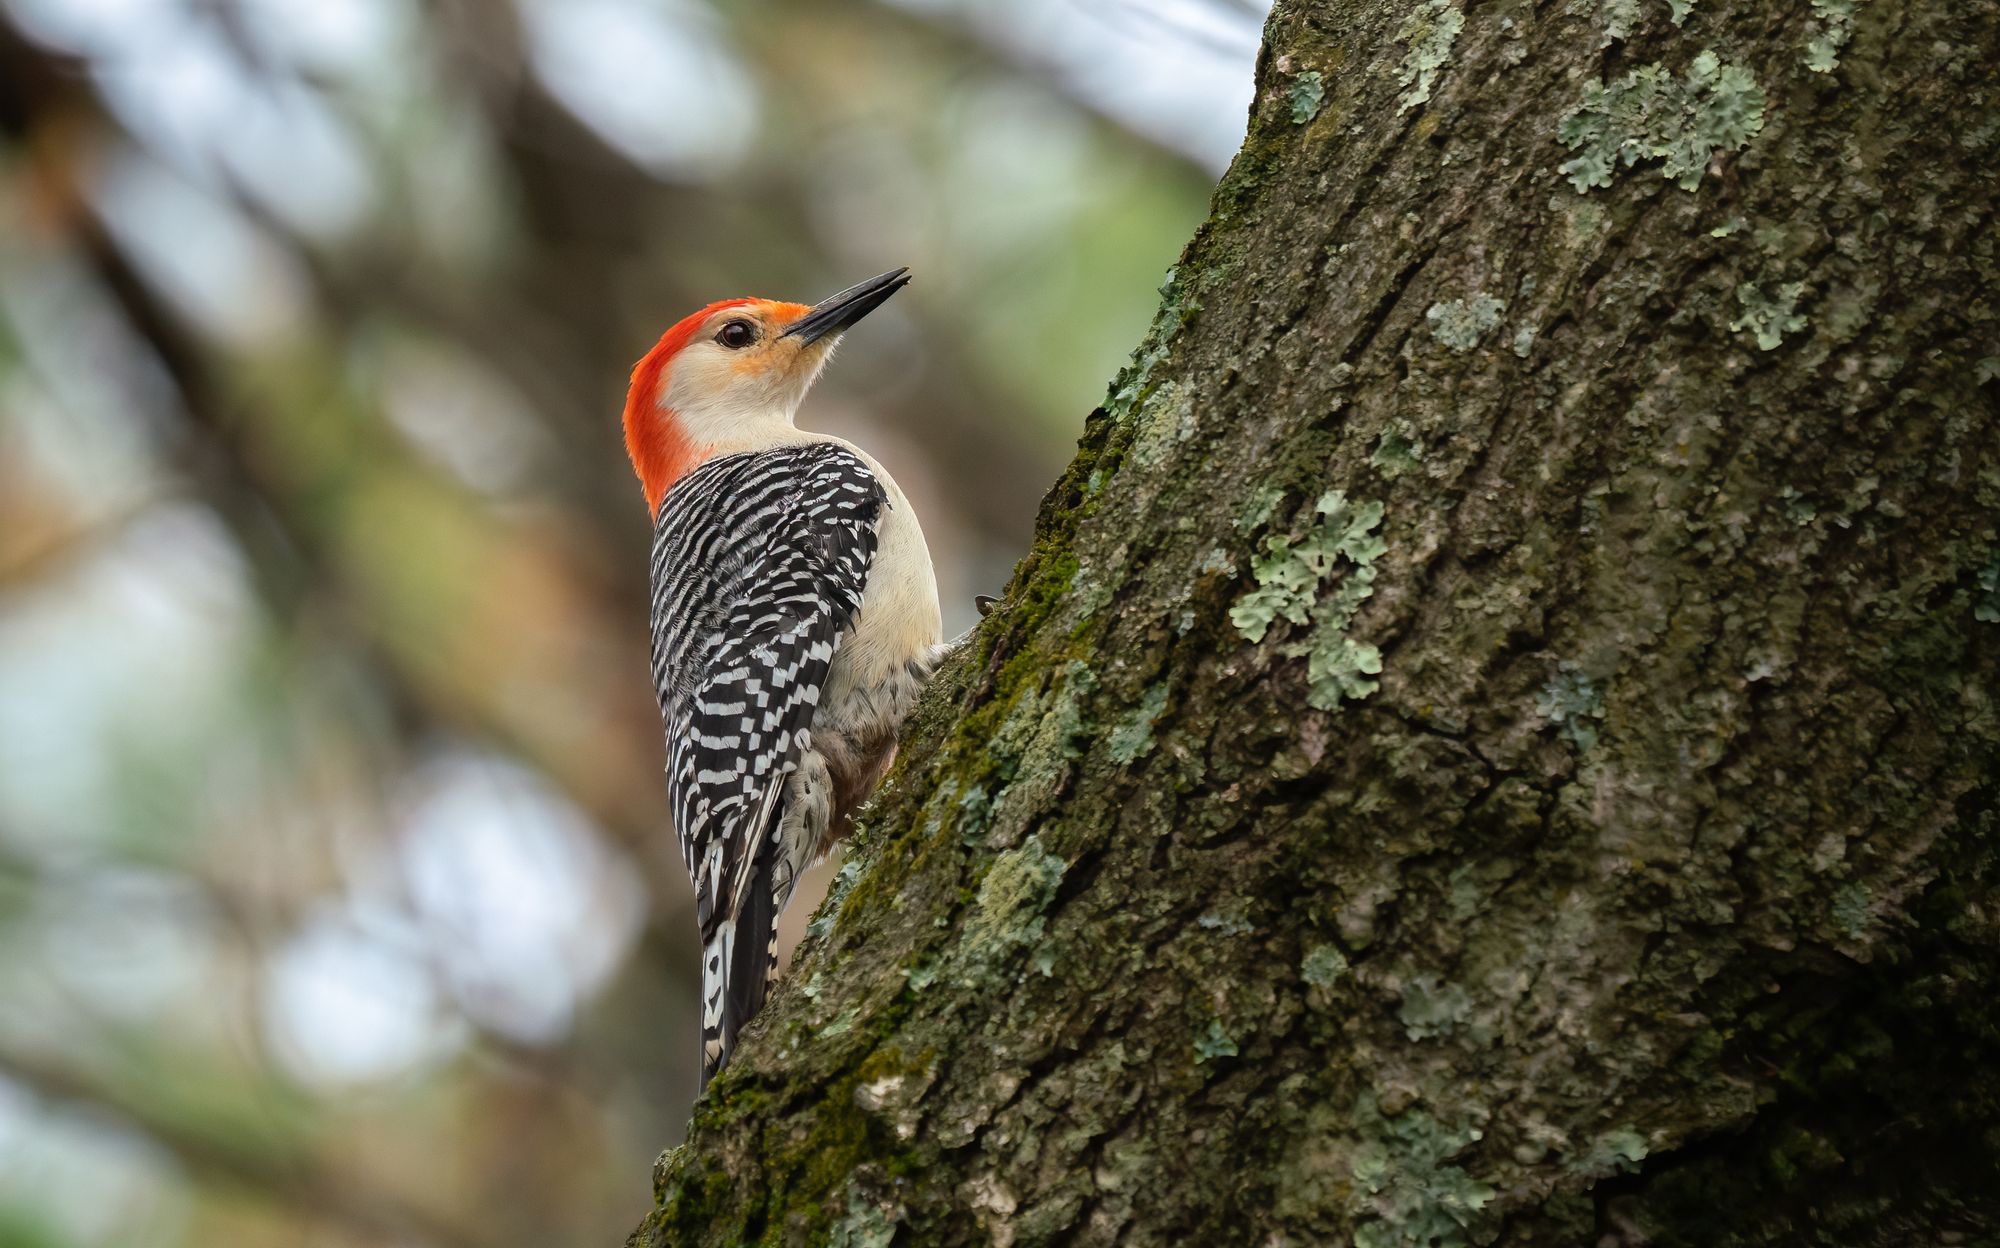 Red-bellied Woodpecker by John Brighenti, Flickr